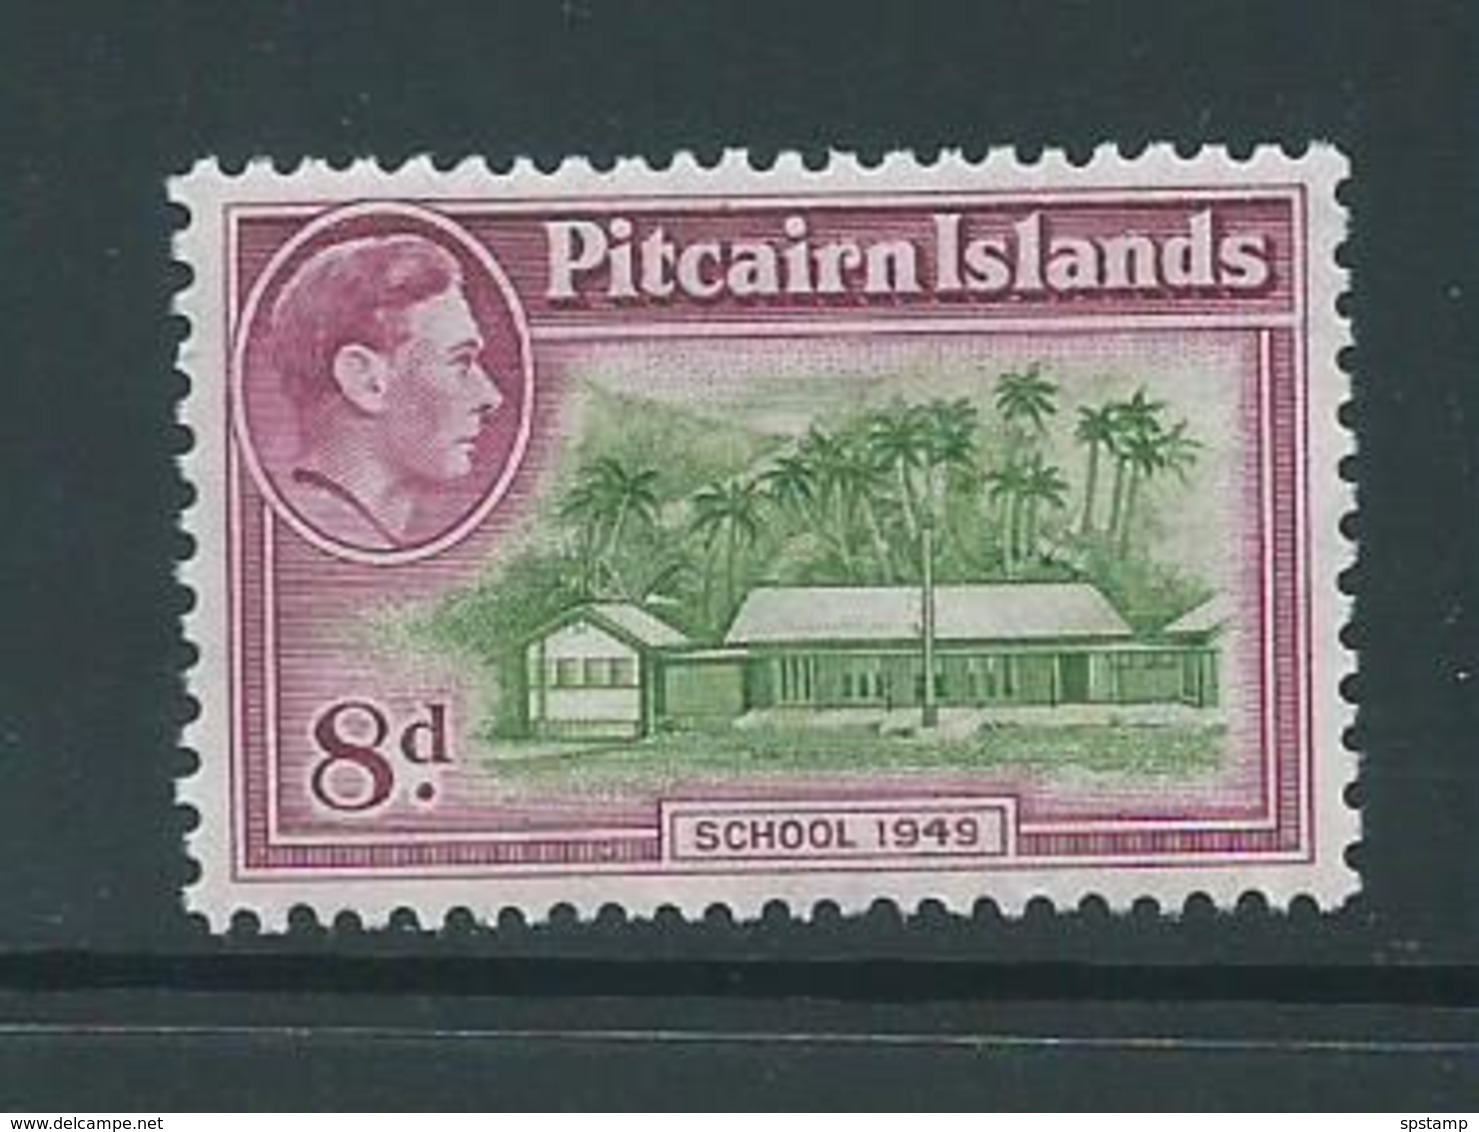 Pitcairn Islands 1940 - 1951 KGVI Definitives Later Issued 8d MVLH - Pitcairn Islands